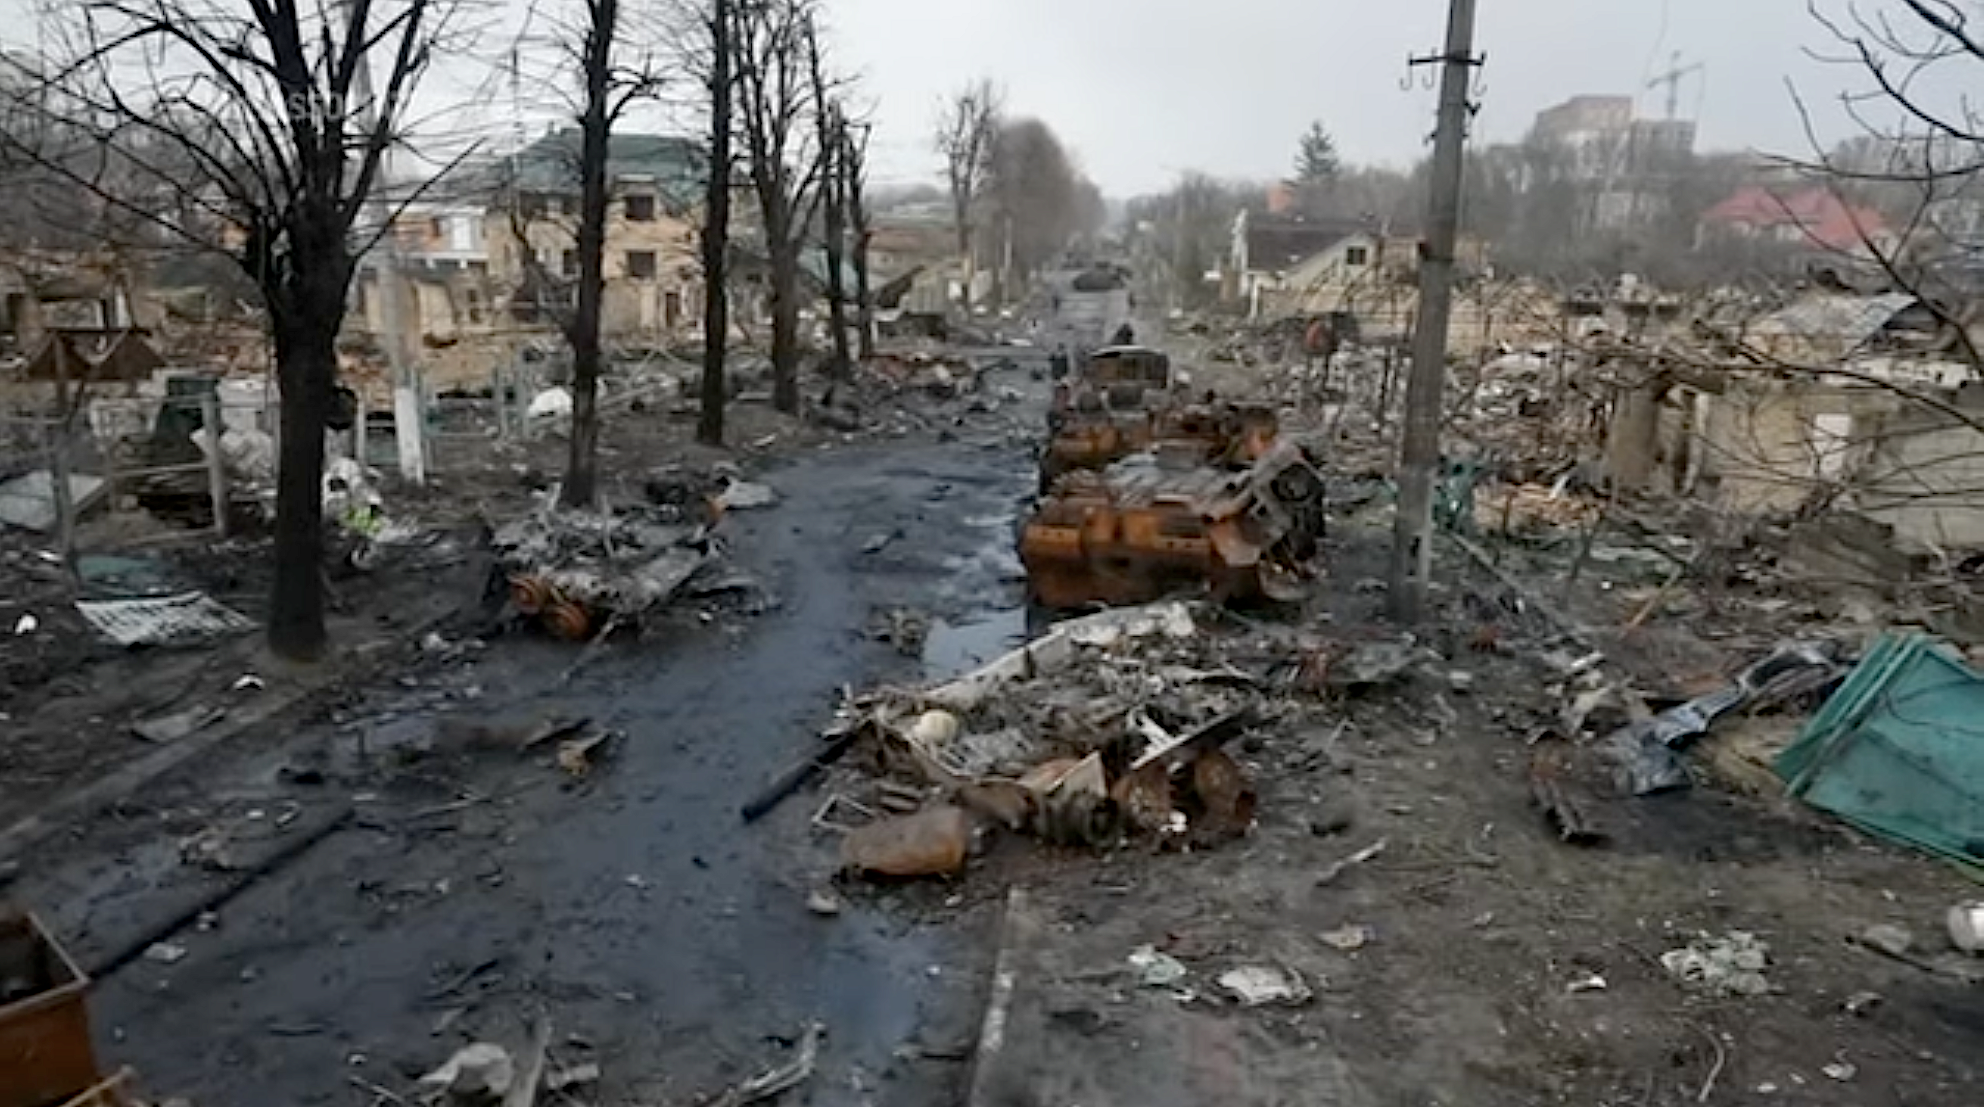 Bucha, Ukraine, after Russian occupation